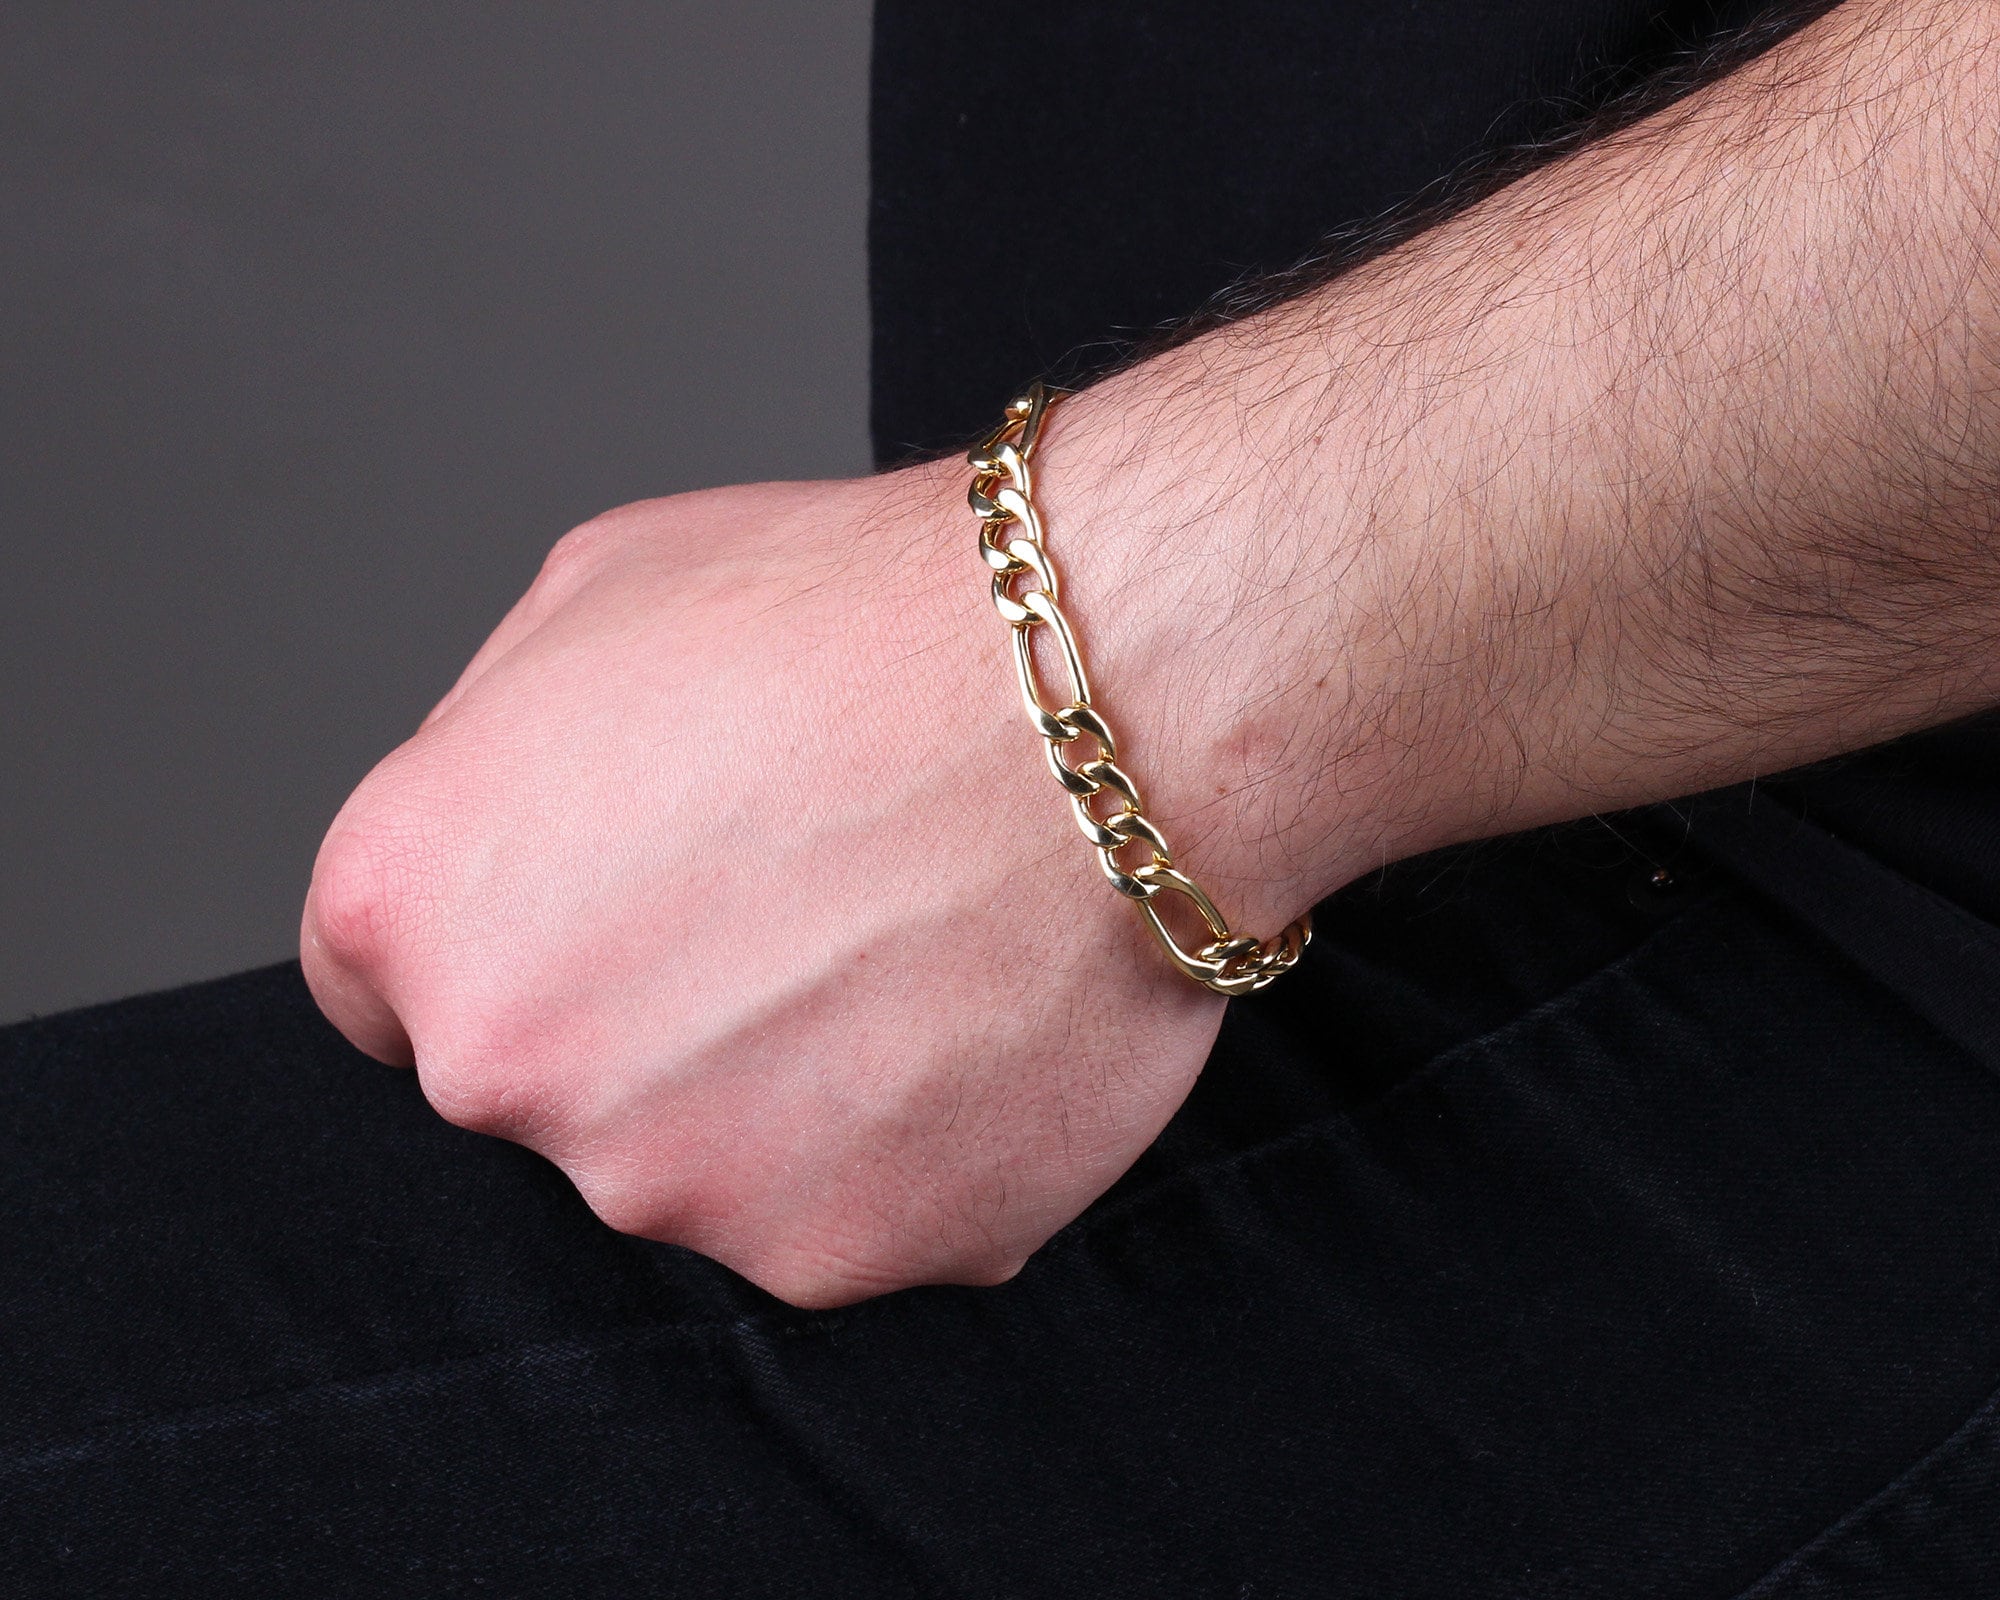 14K Solid Gold Figaro Mariner Chain Bracelet, 8mm Layering Chain, Gift For Her Him, Minimal Fashion Bracelet, Unisex Chain, Delicate Modern